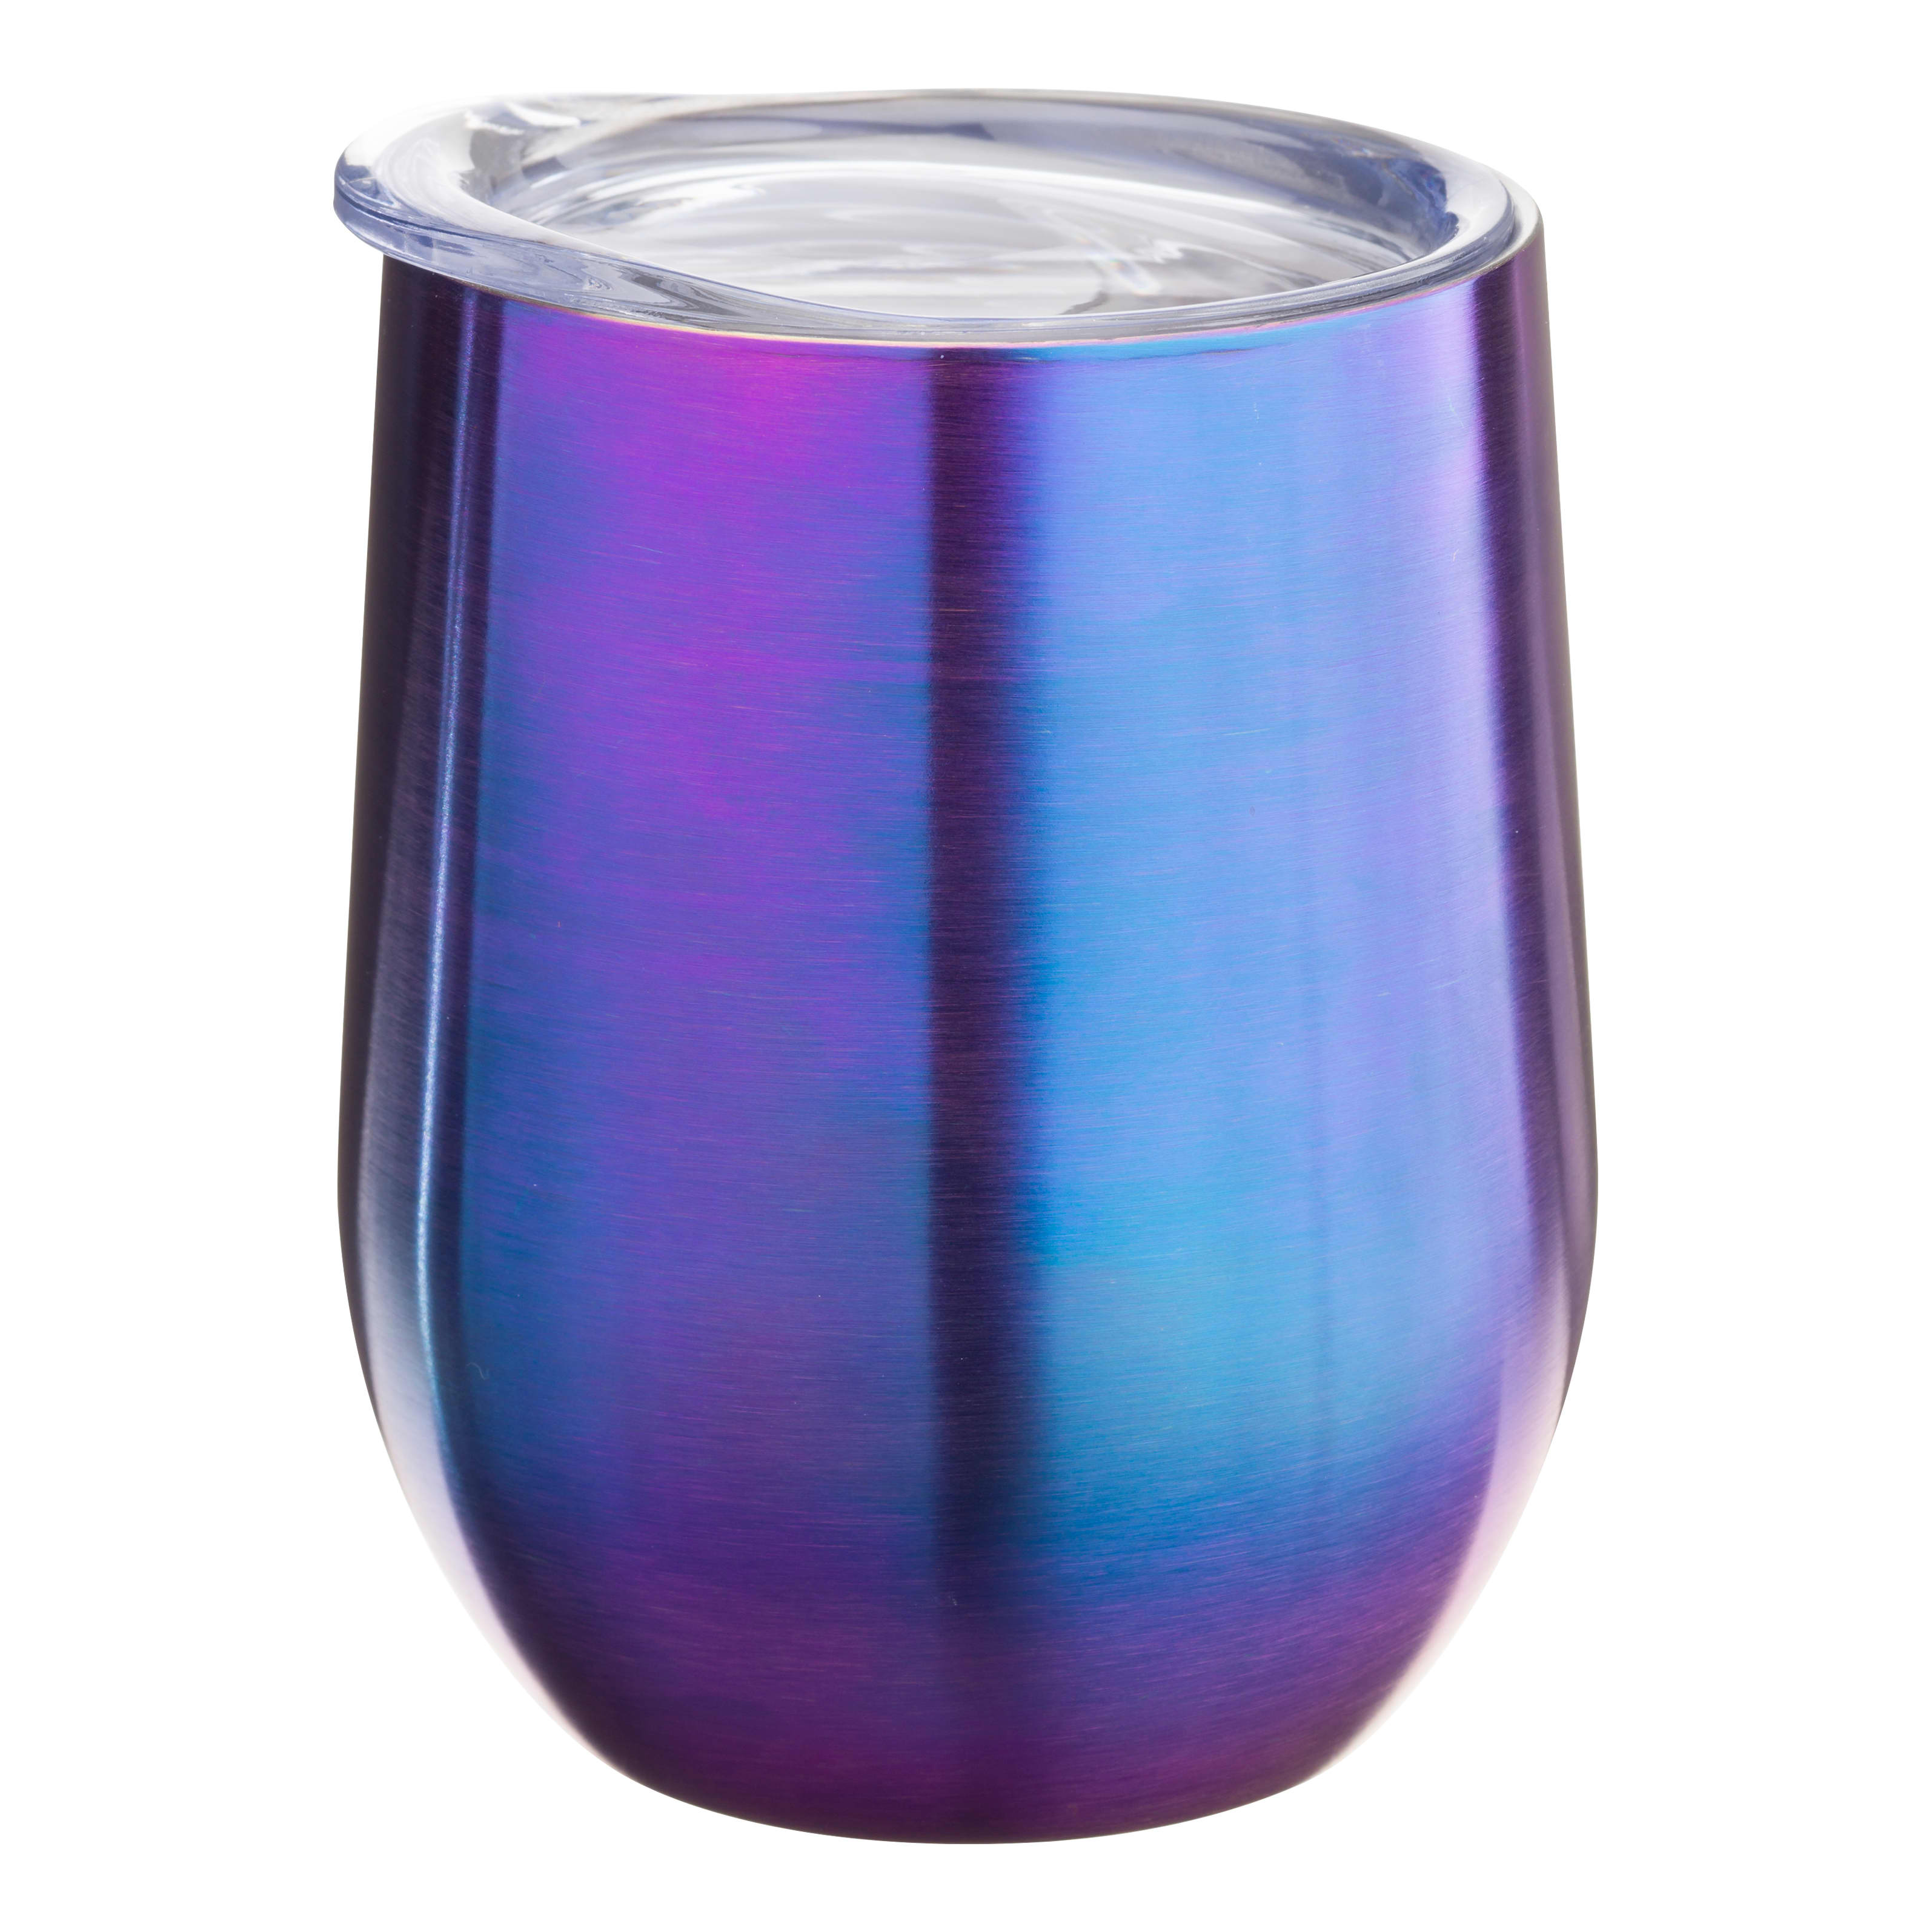 PURE Drinkware 12-oz. Stemless Wine Glass - Blue/Purple Solid